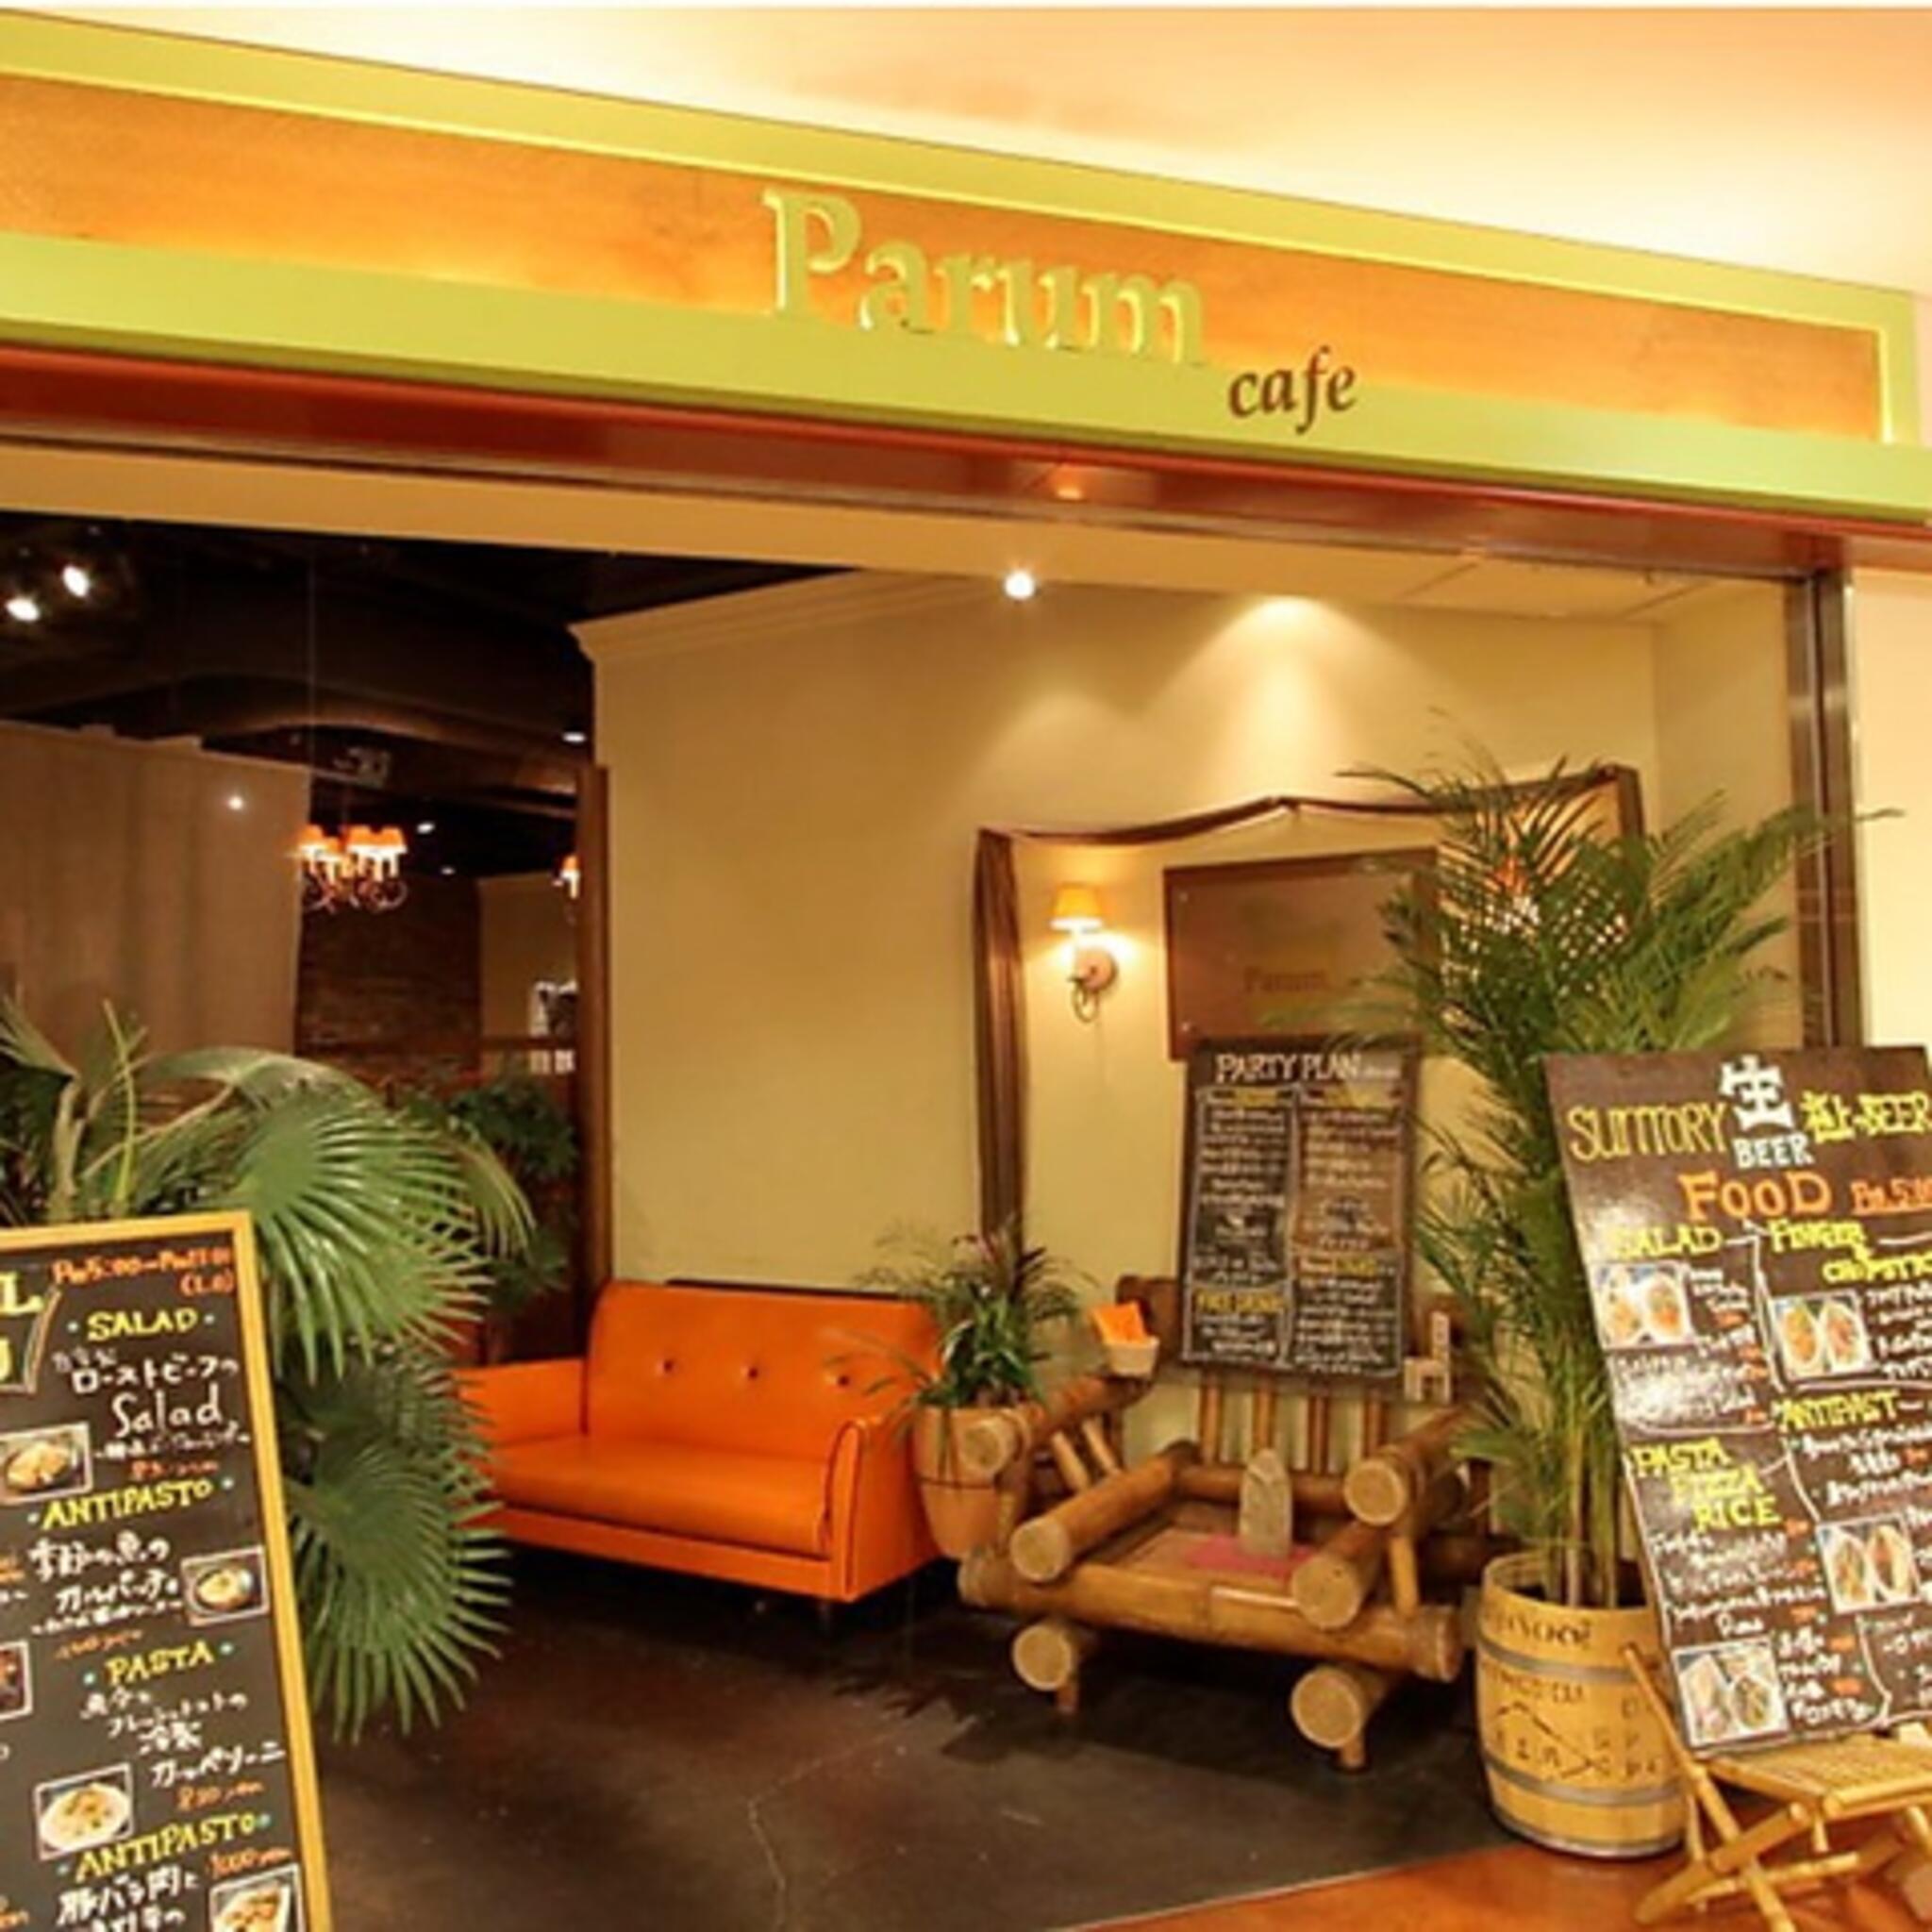 Parum cafe(パームカフェ)の代表写真2